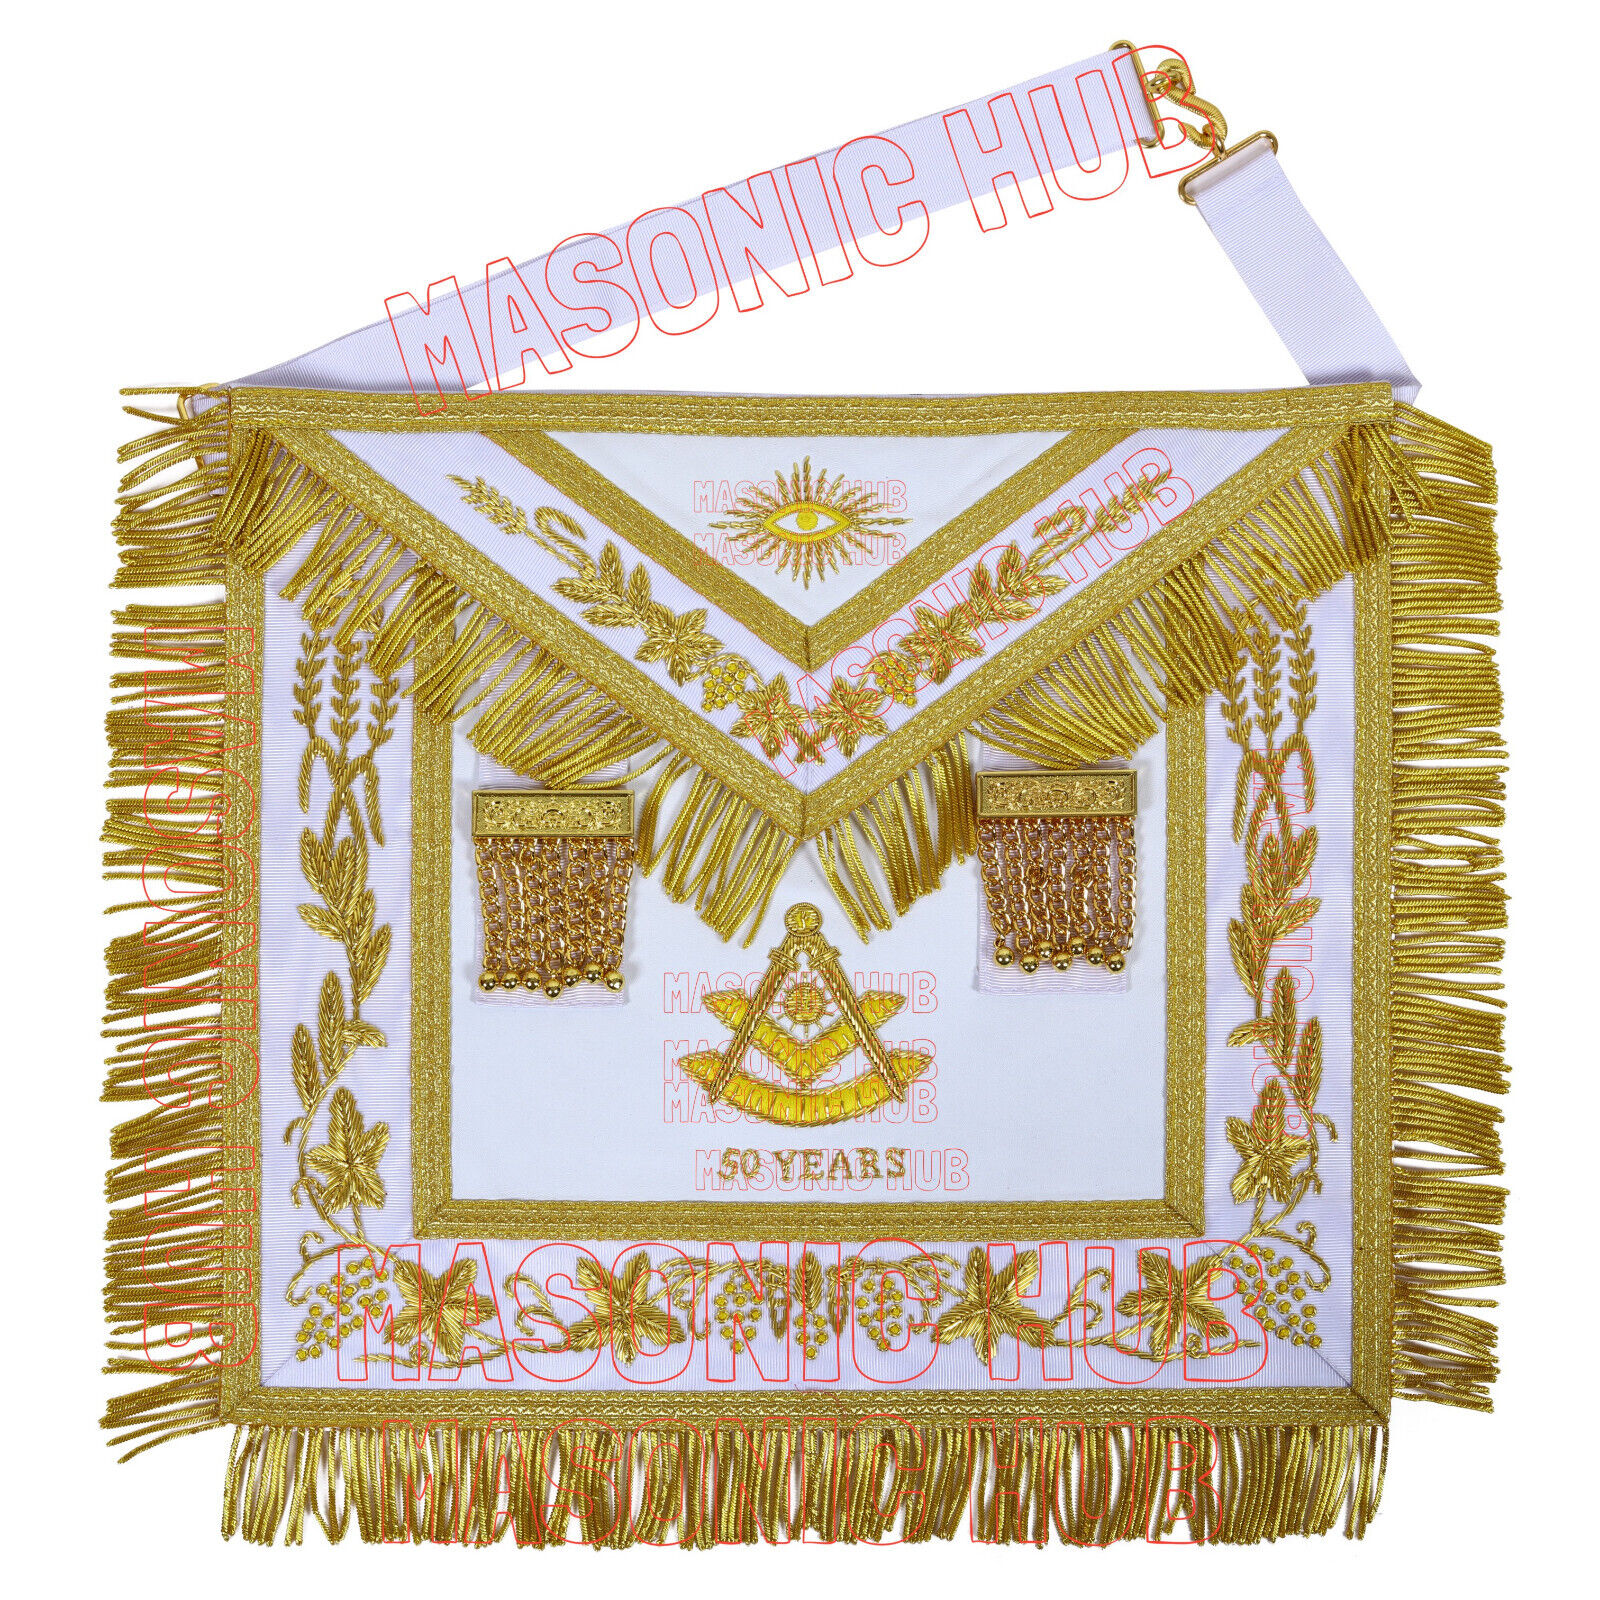 Masonic Past Master Apron Luxurious Lambskin Gold Bullion Apron - CUSTOMIZE